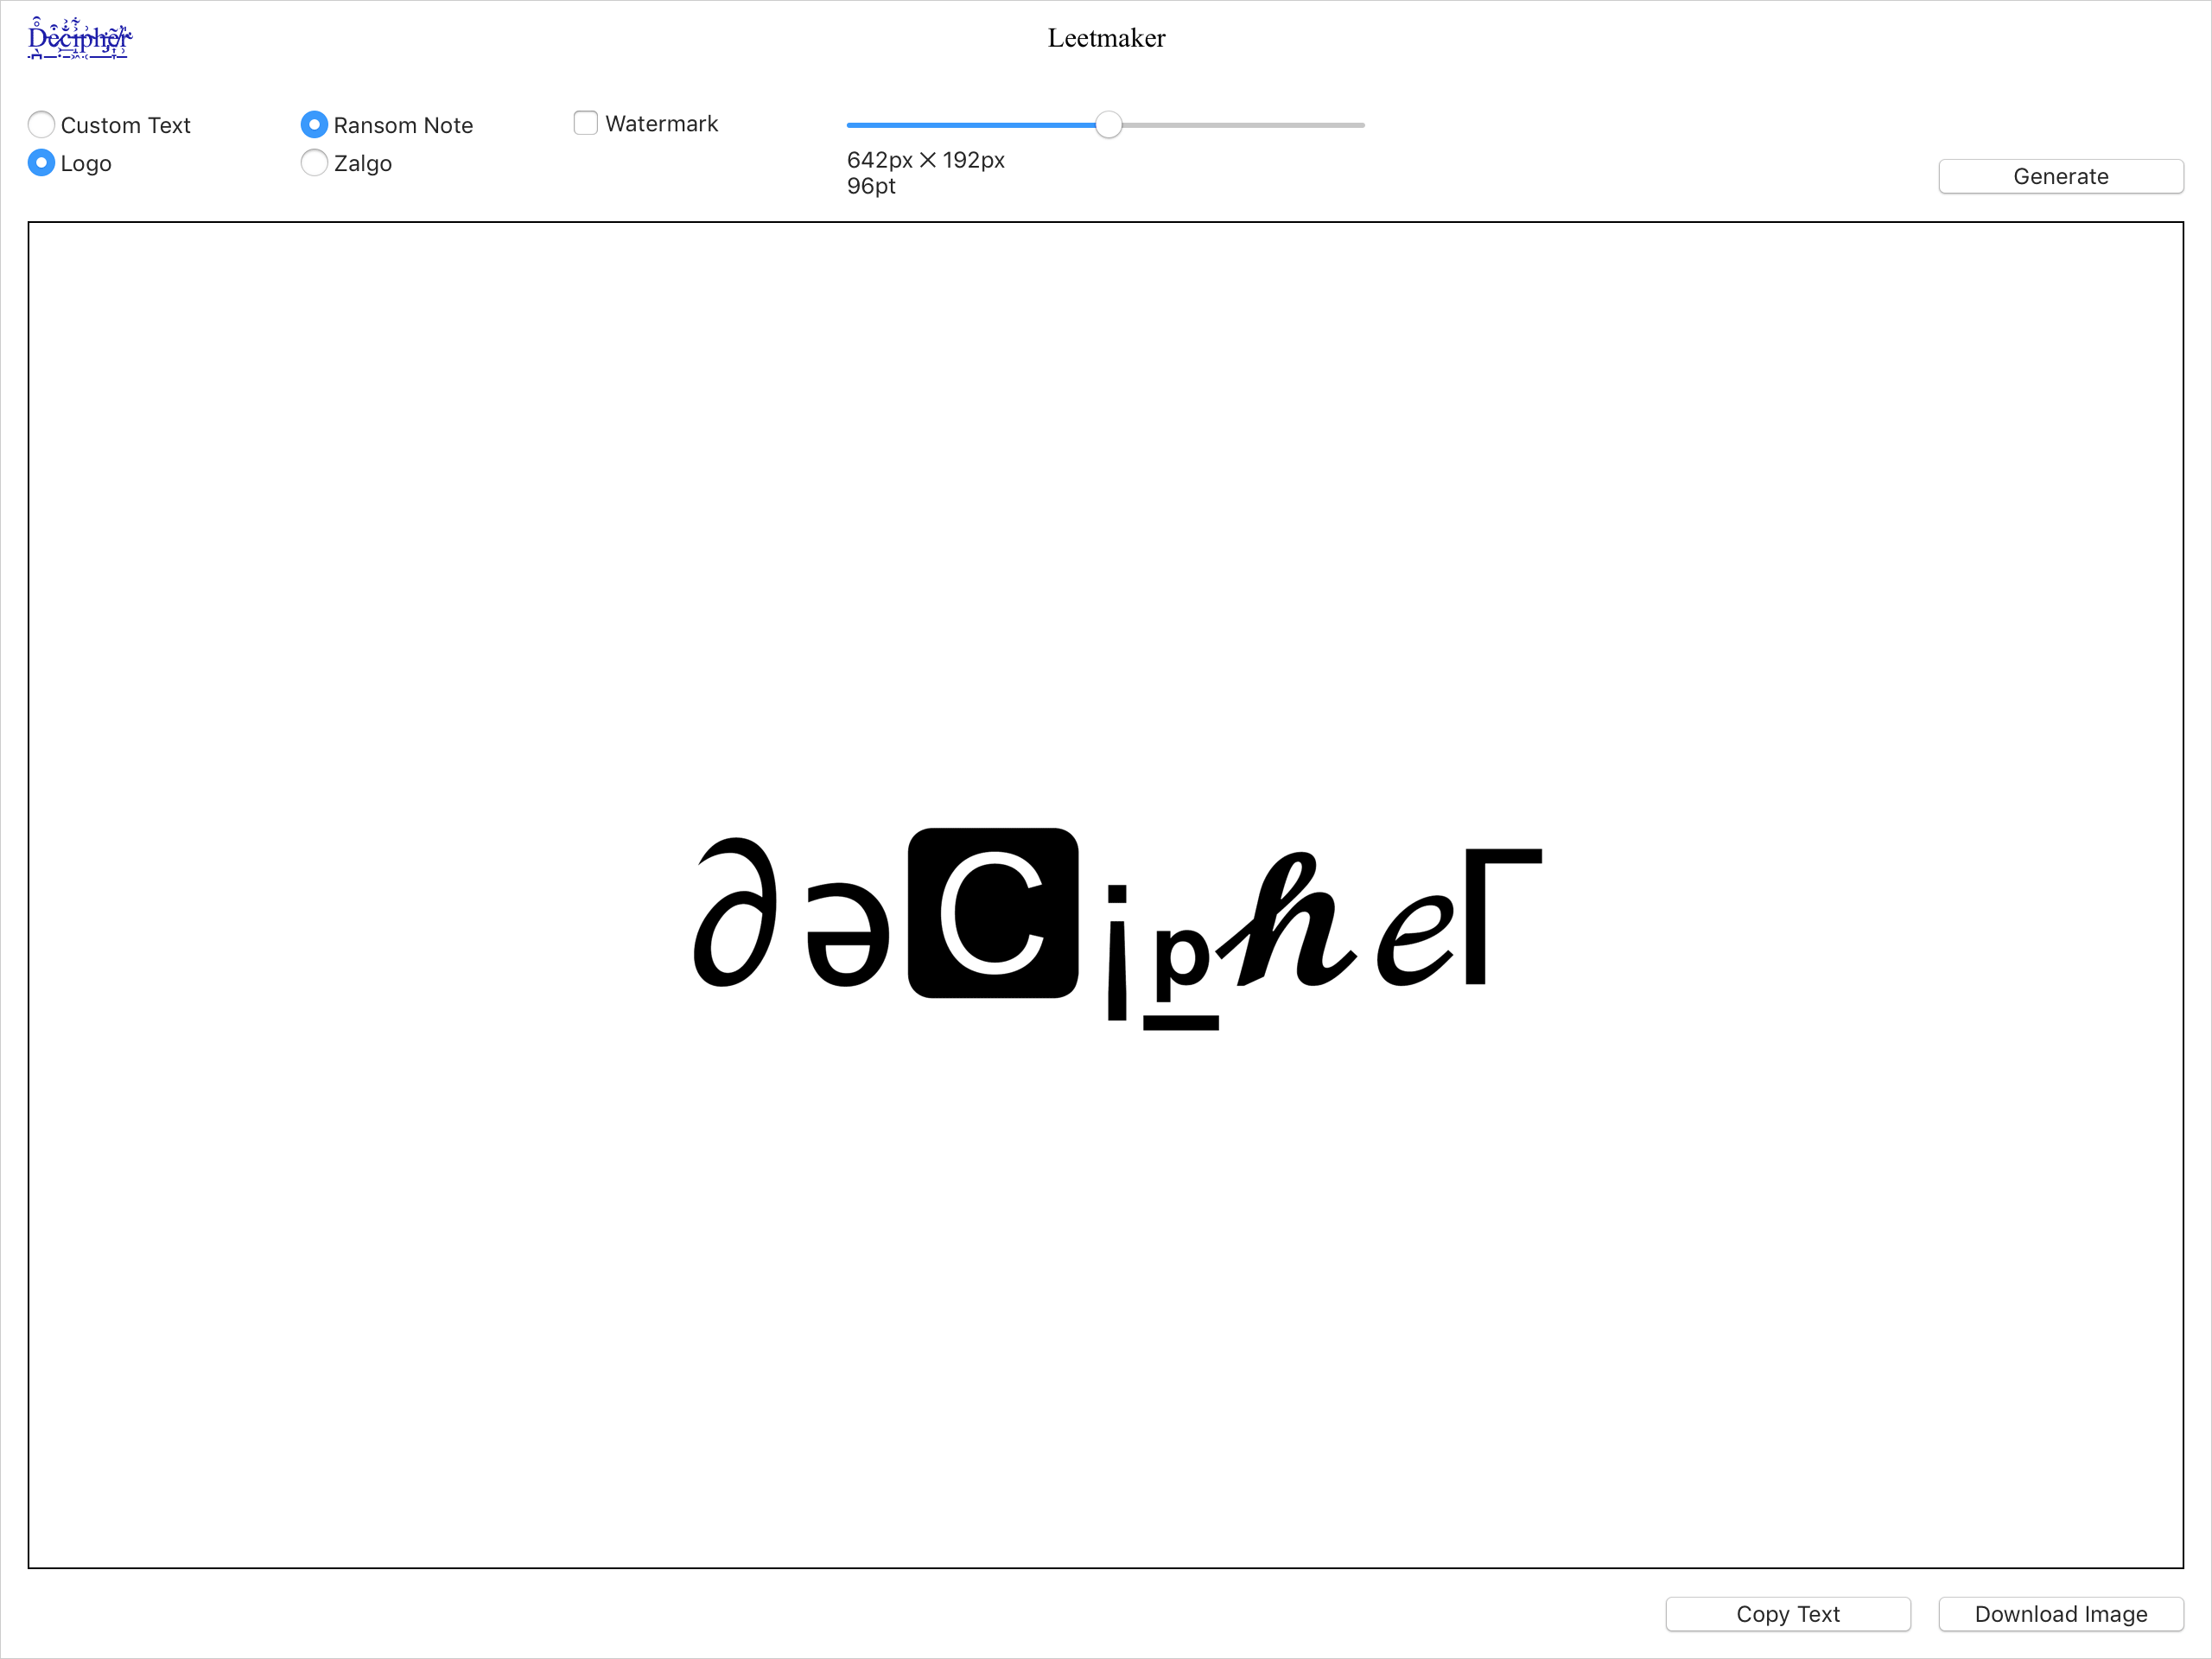 Decipher logo and type style generator